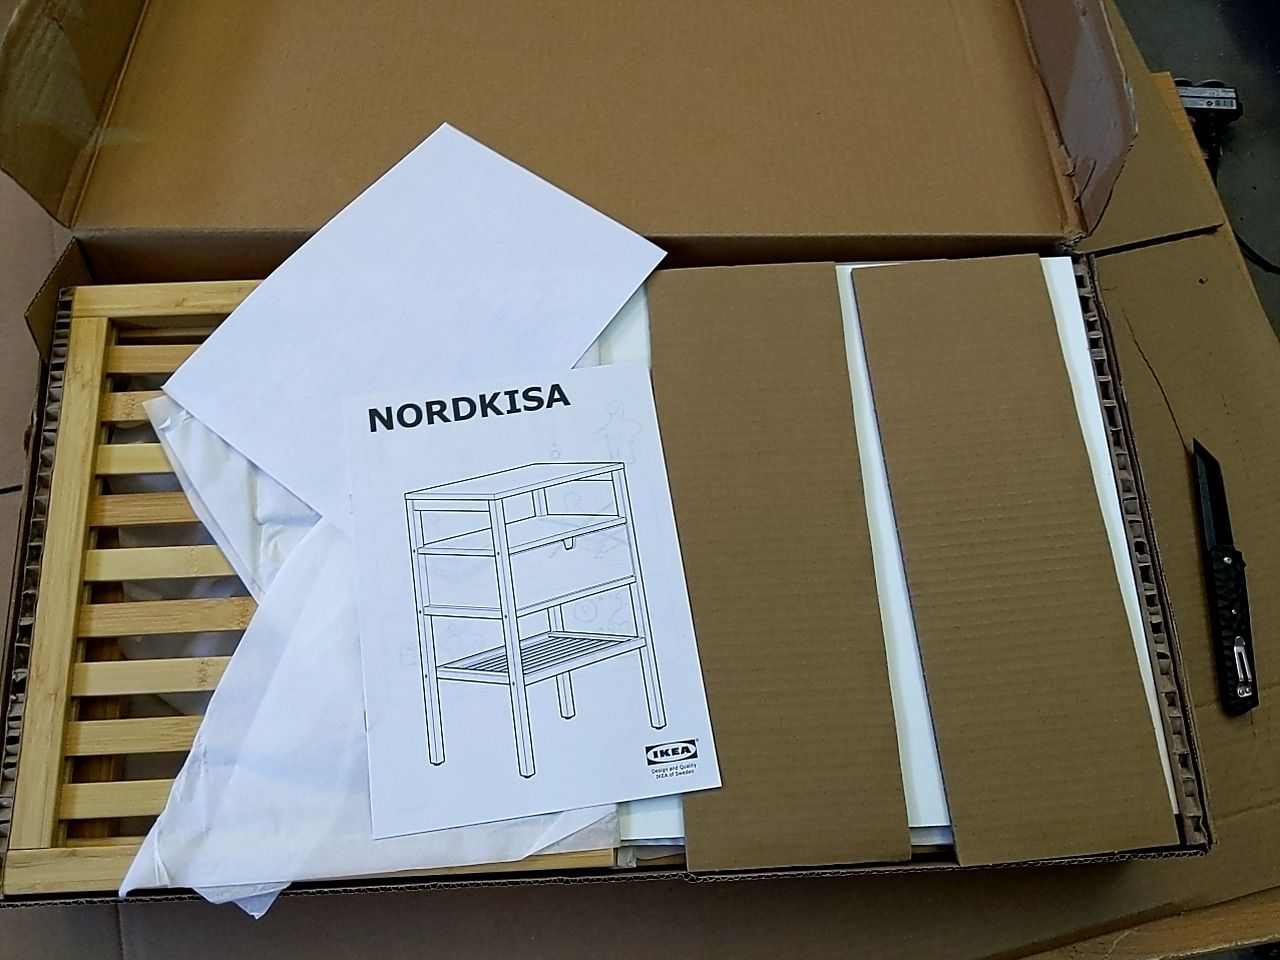 Noční stolek Ikea Nordkisa